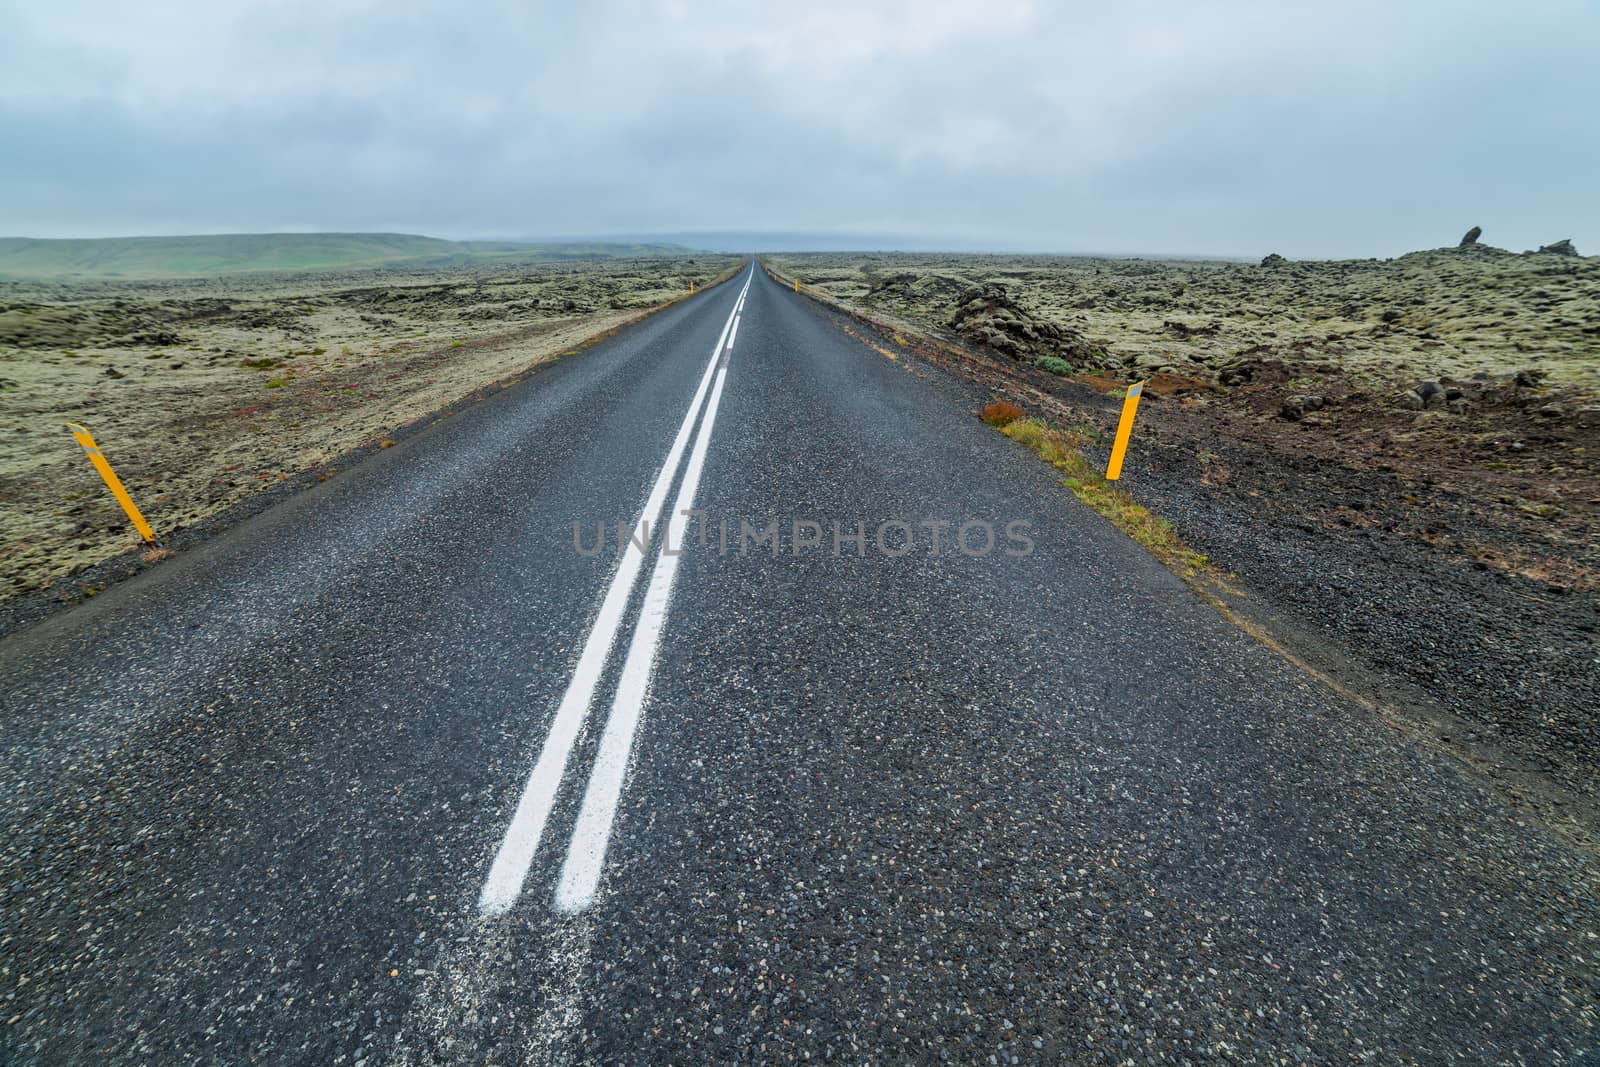 Highway through Iceland landscape at foggy day. Horizontal shot